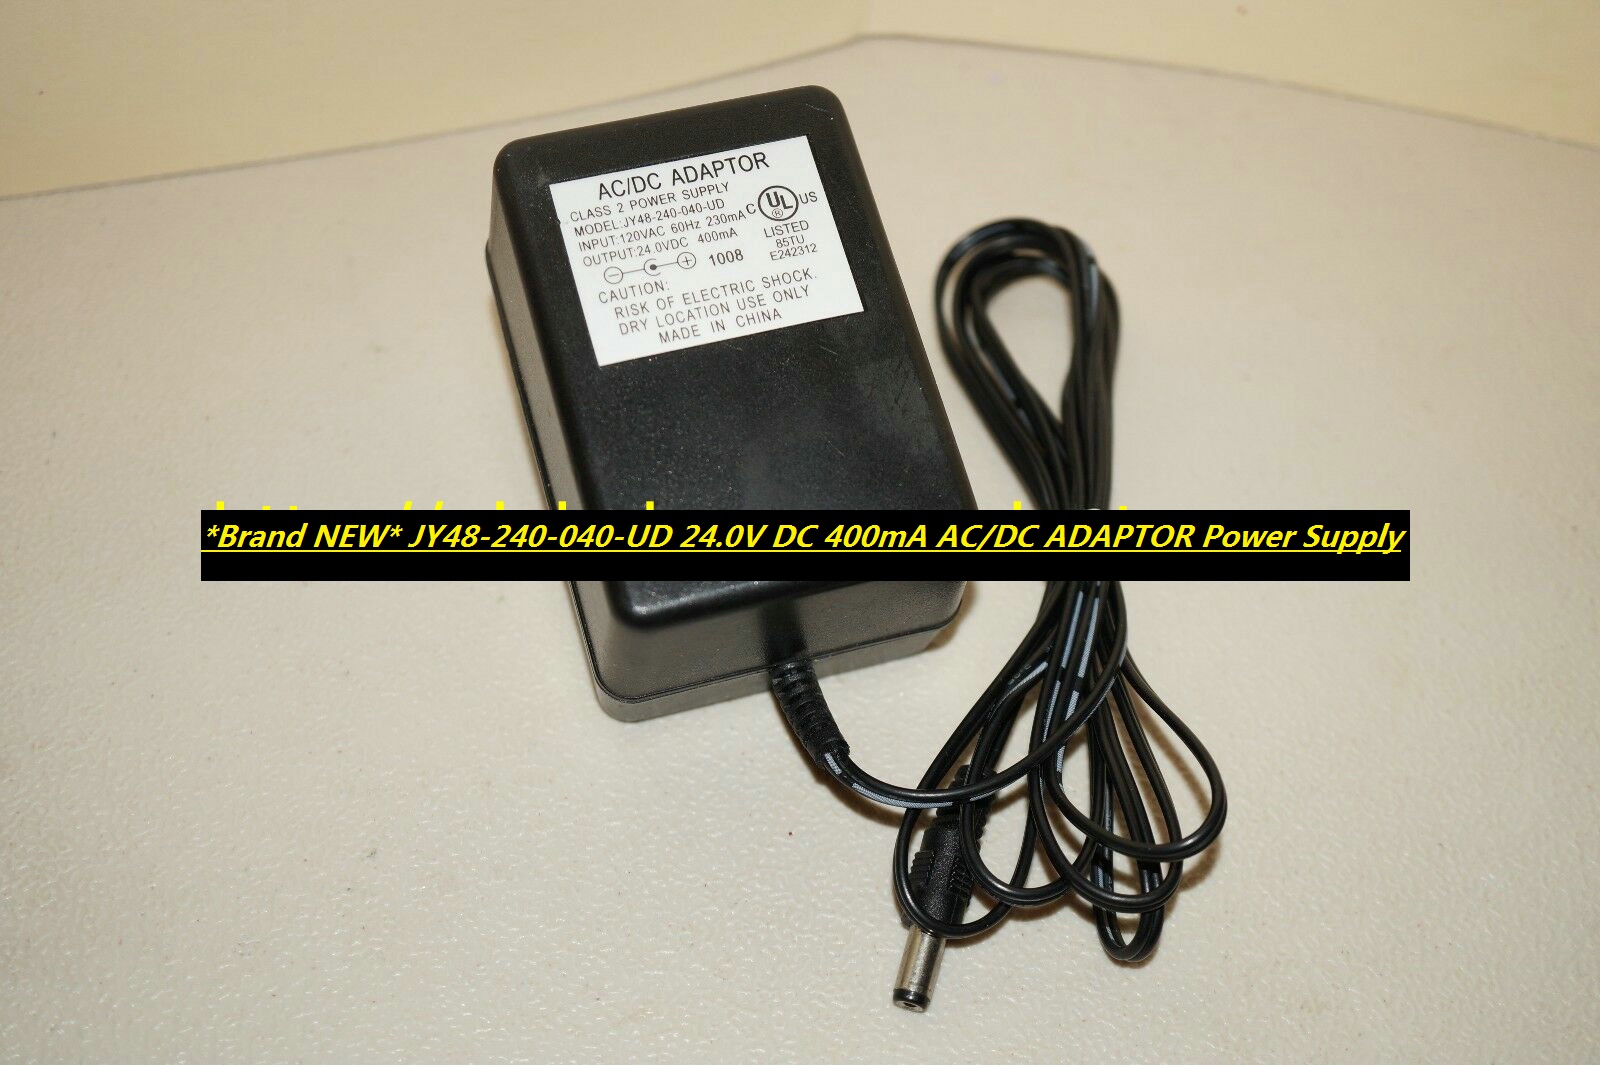 *Brand NEW* JY48-240-040-UD 24.0V DC 400mA AC/DC ADAPTOR Power Supply - Click Image to Close